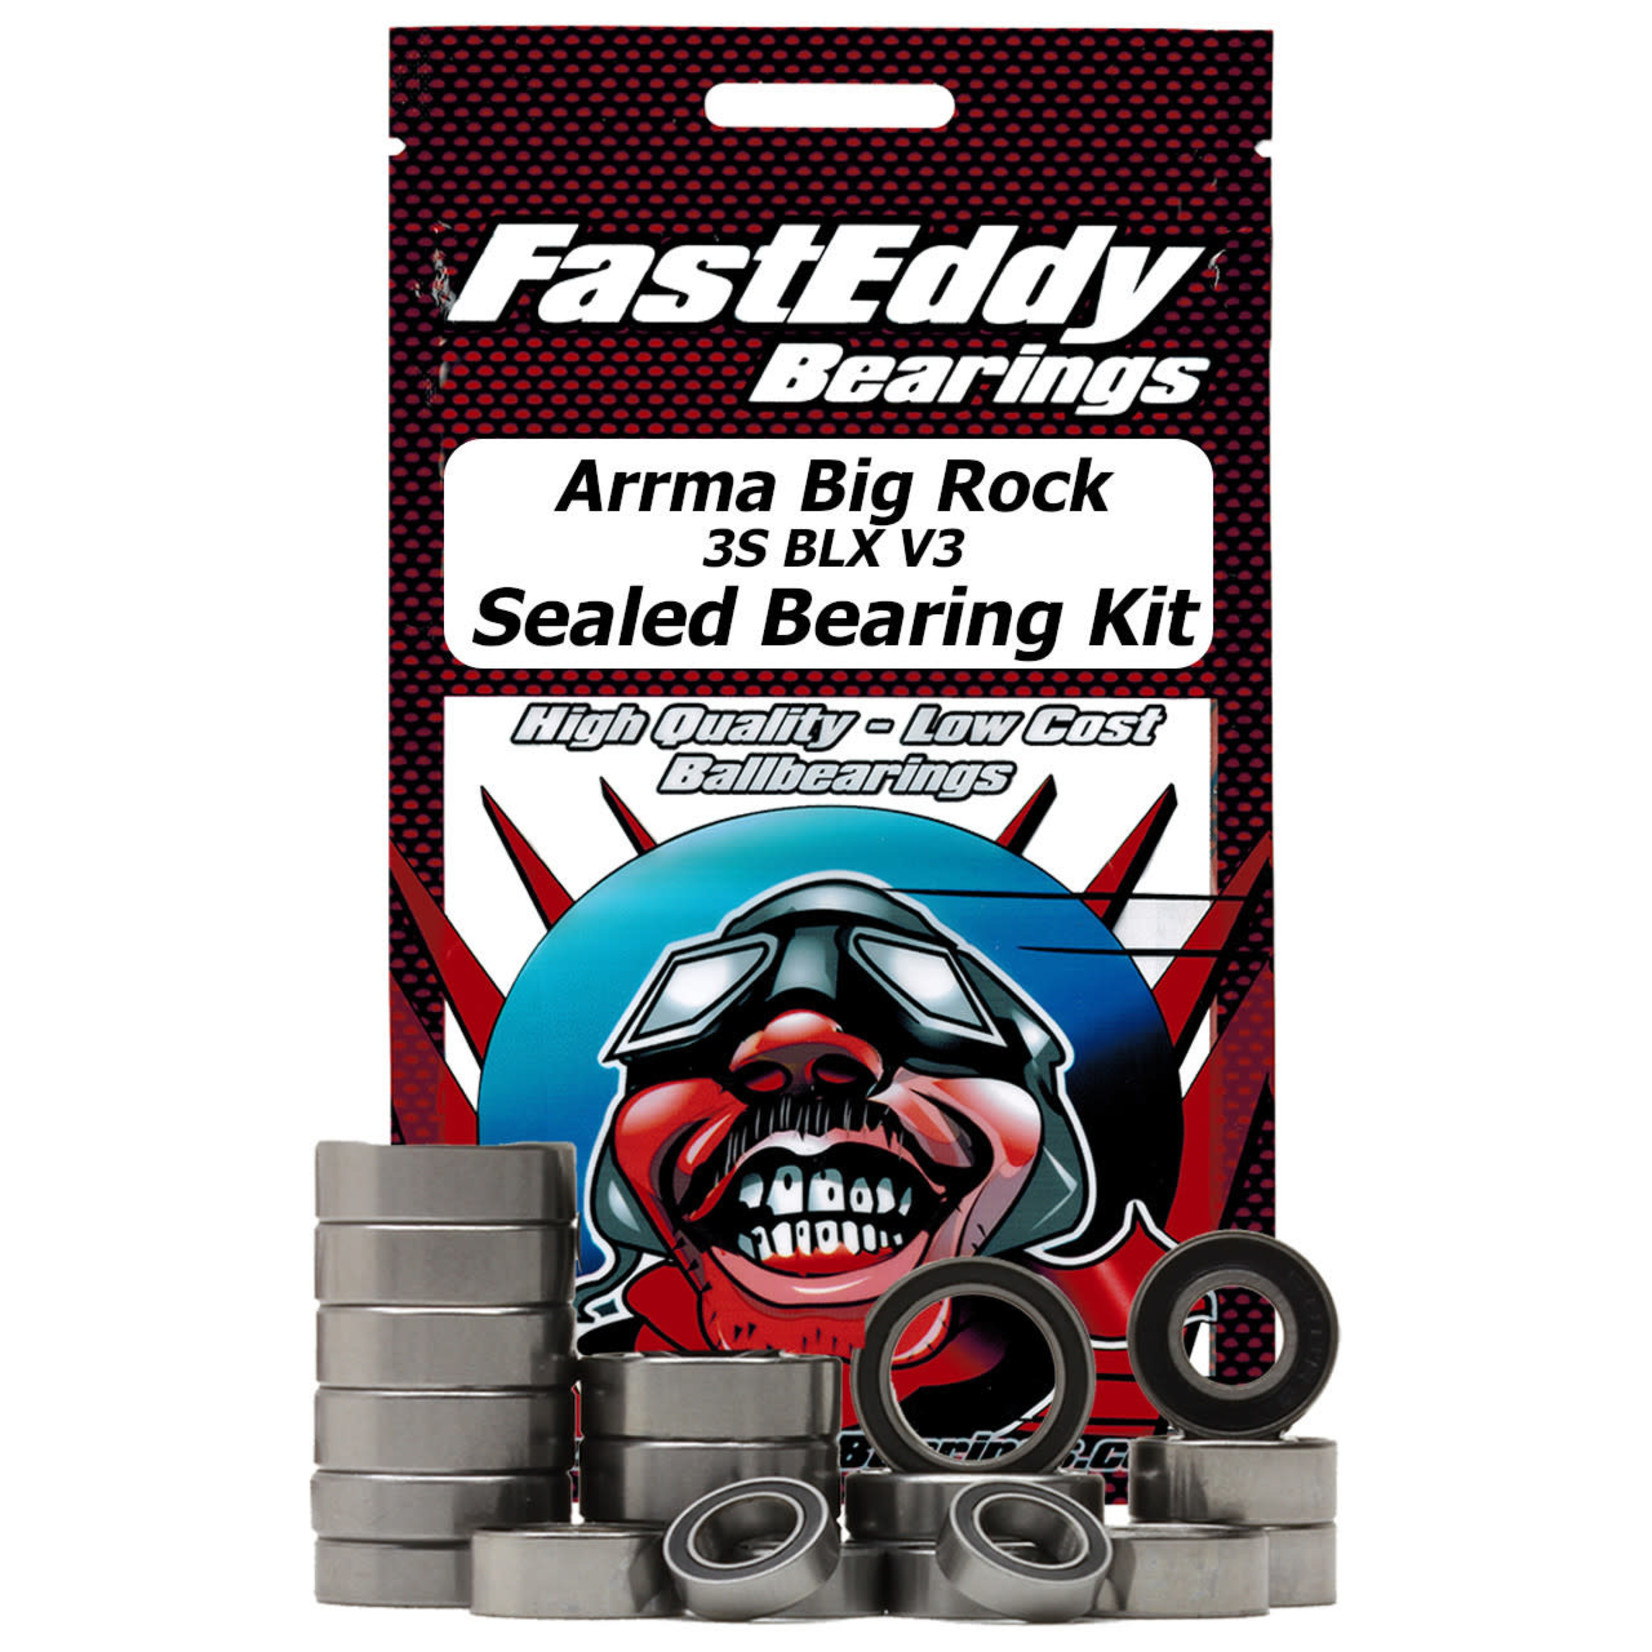 FastEddy FastEddy Bearings Arrma Big Rock 3S BLX V3 Sealed Bearing Kit #TFE6457